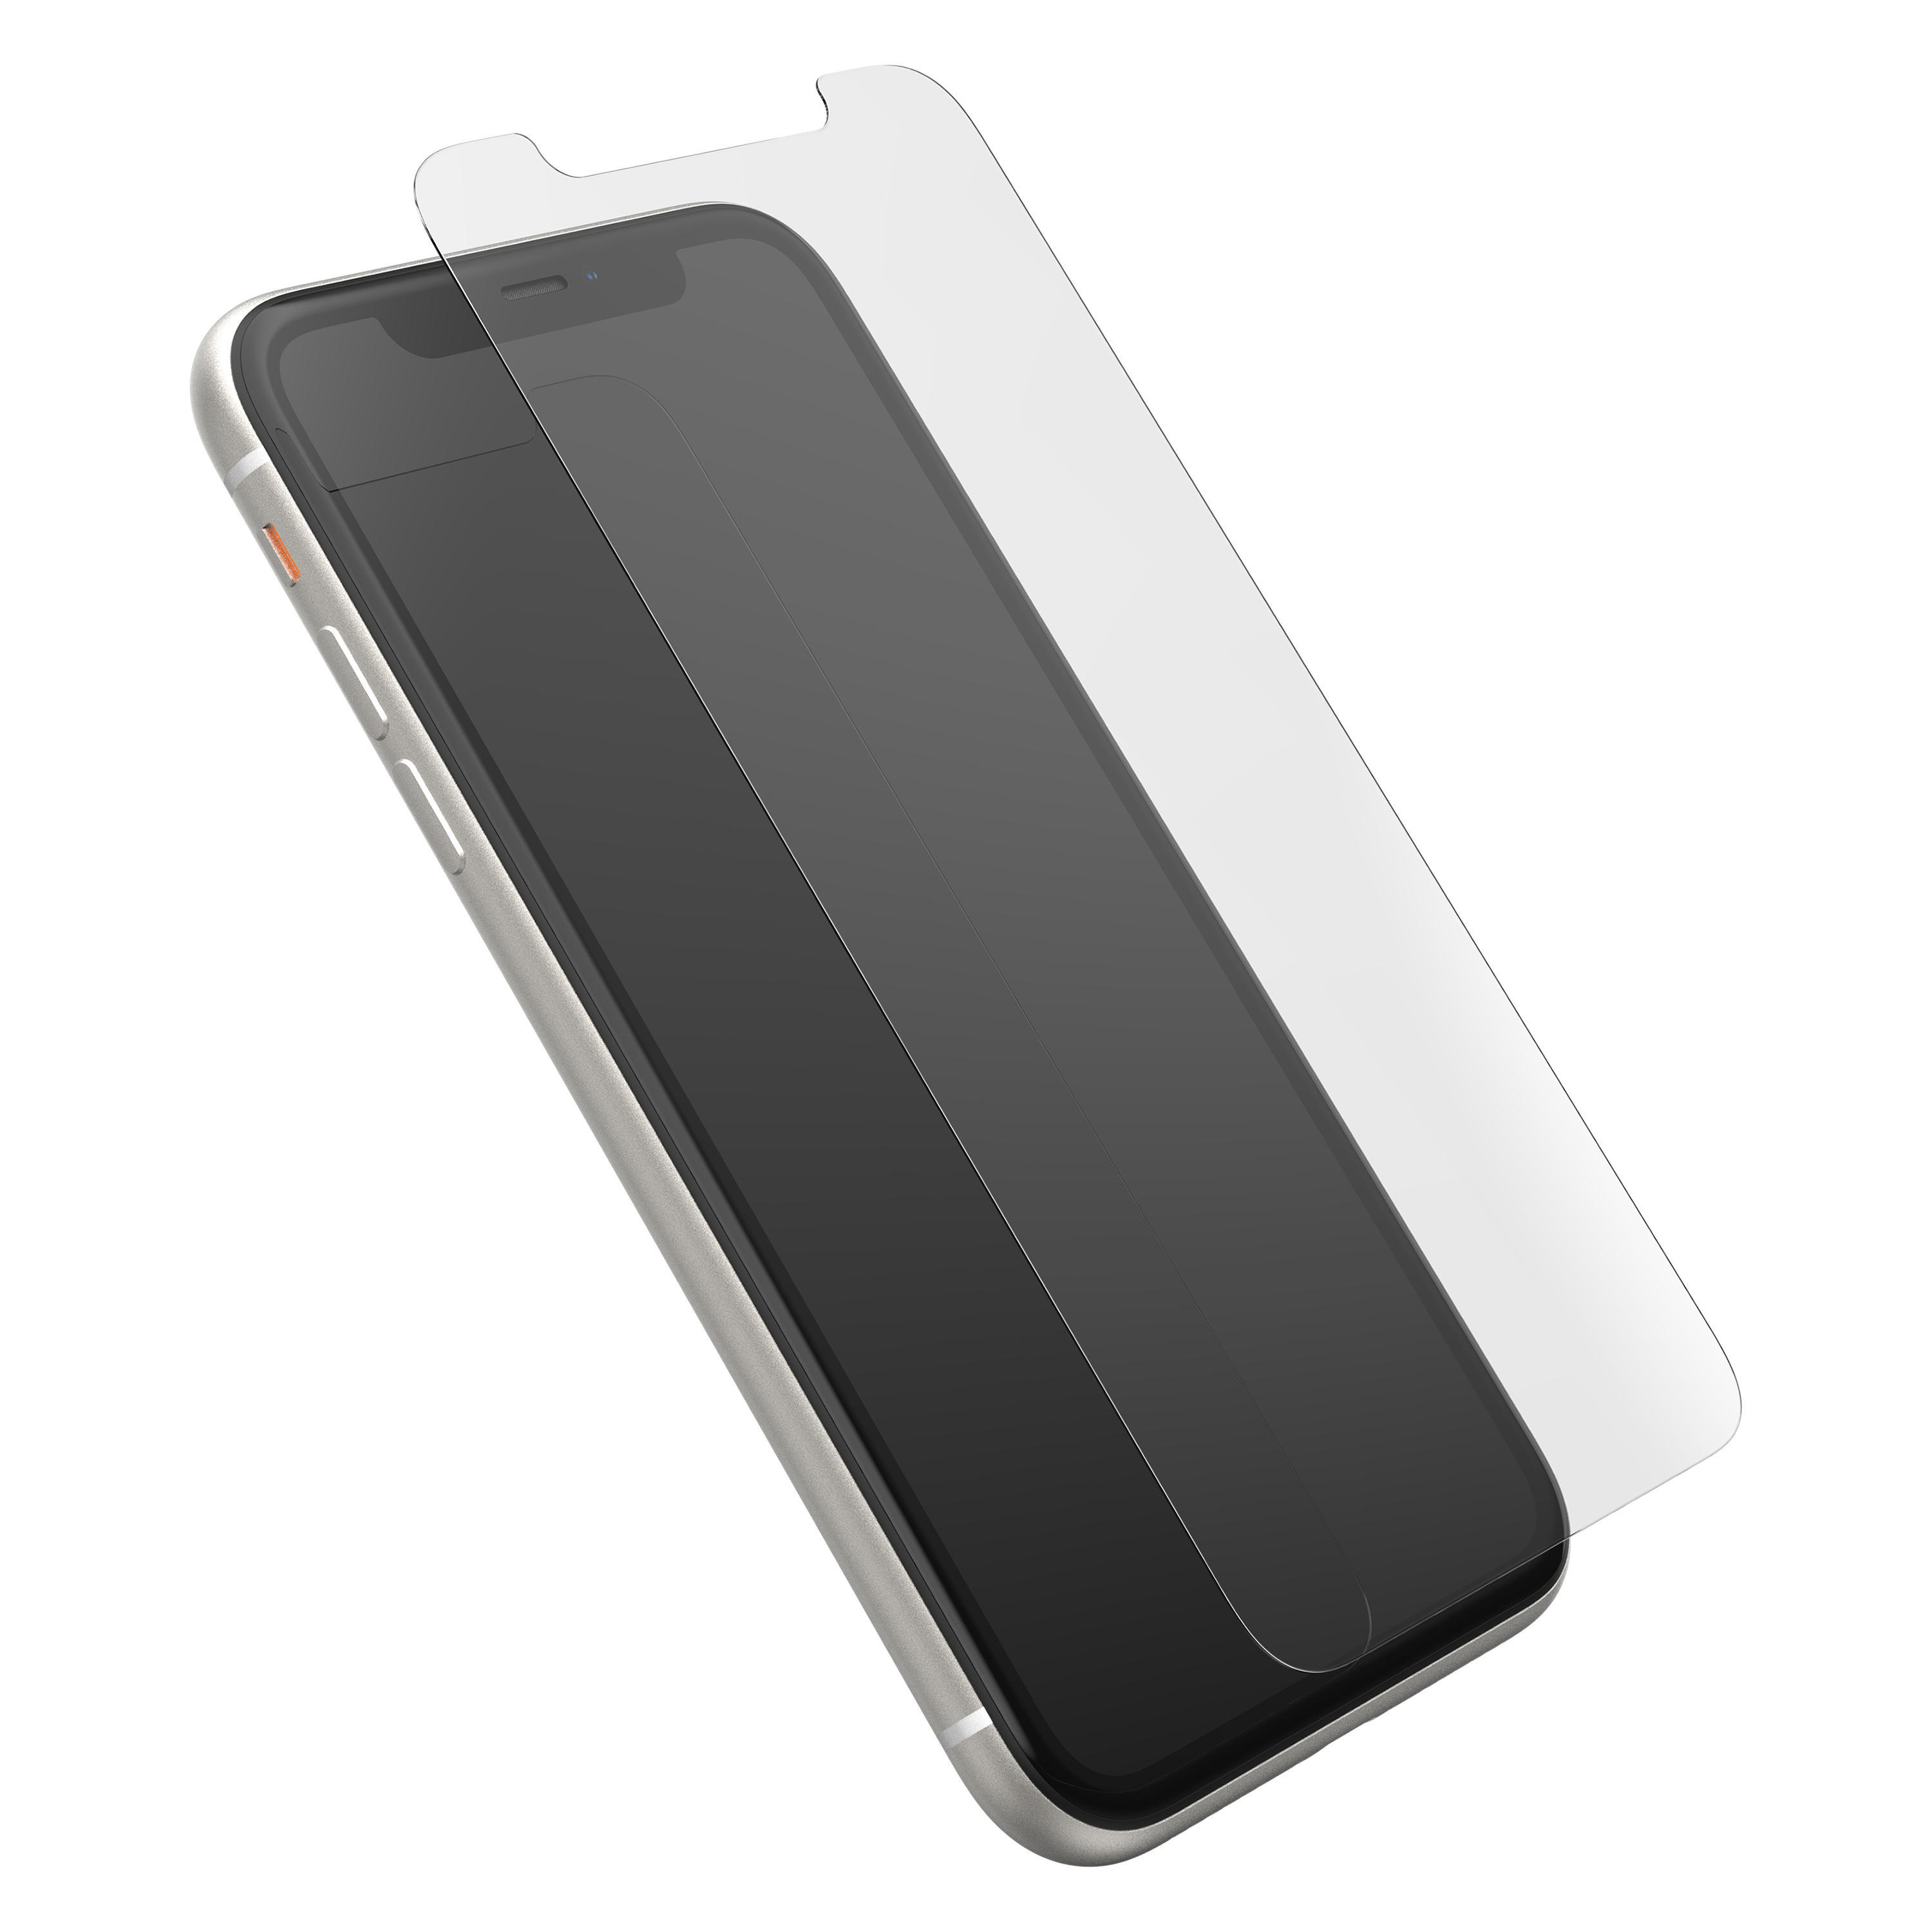 11, Transparent Apple, iPhone Glass, OTTERBOX Alpha